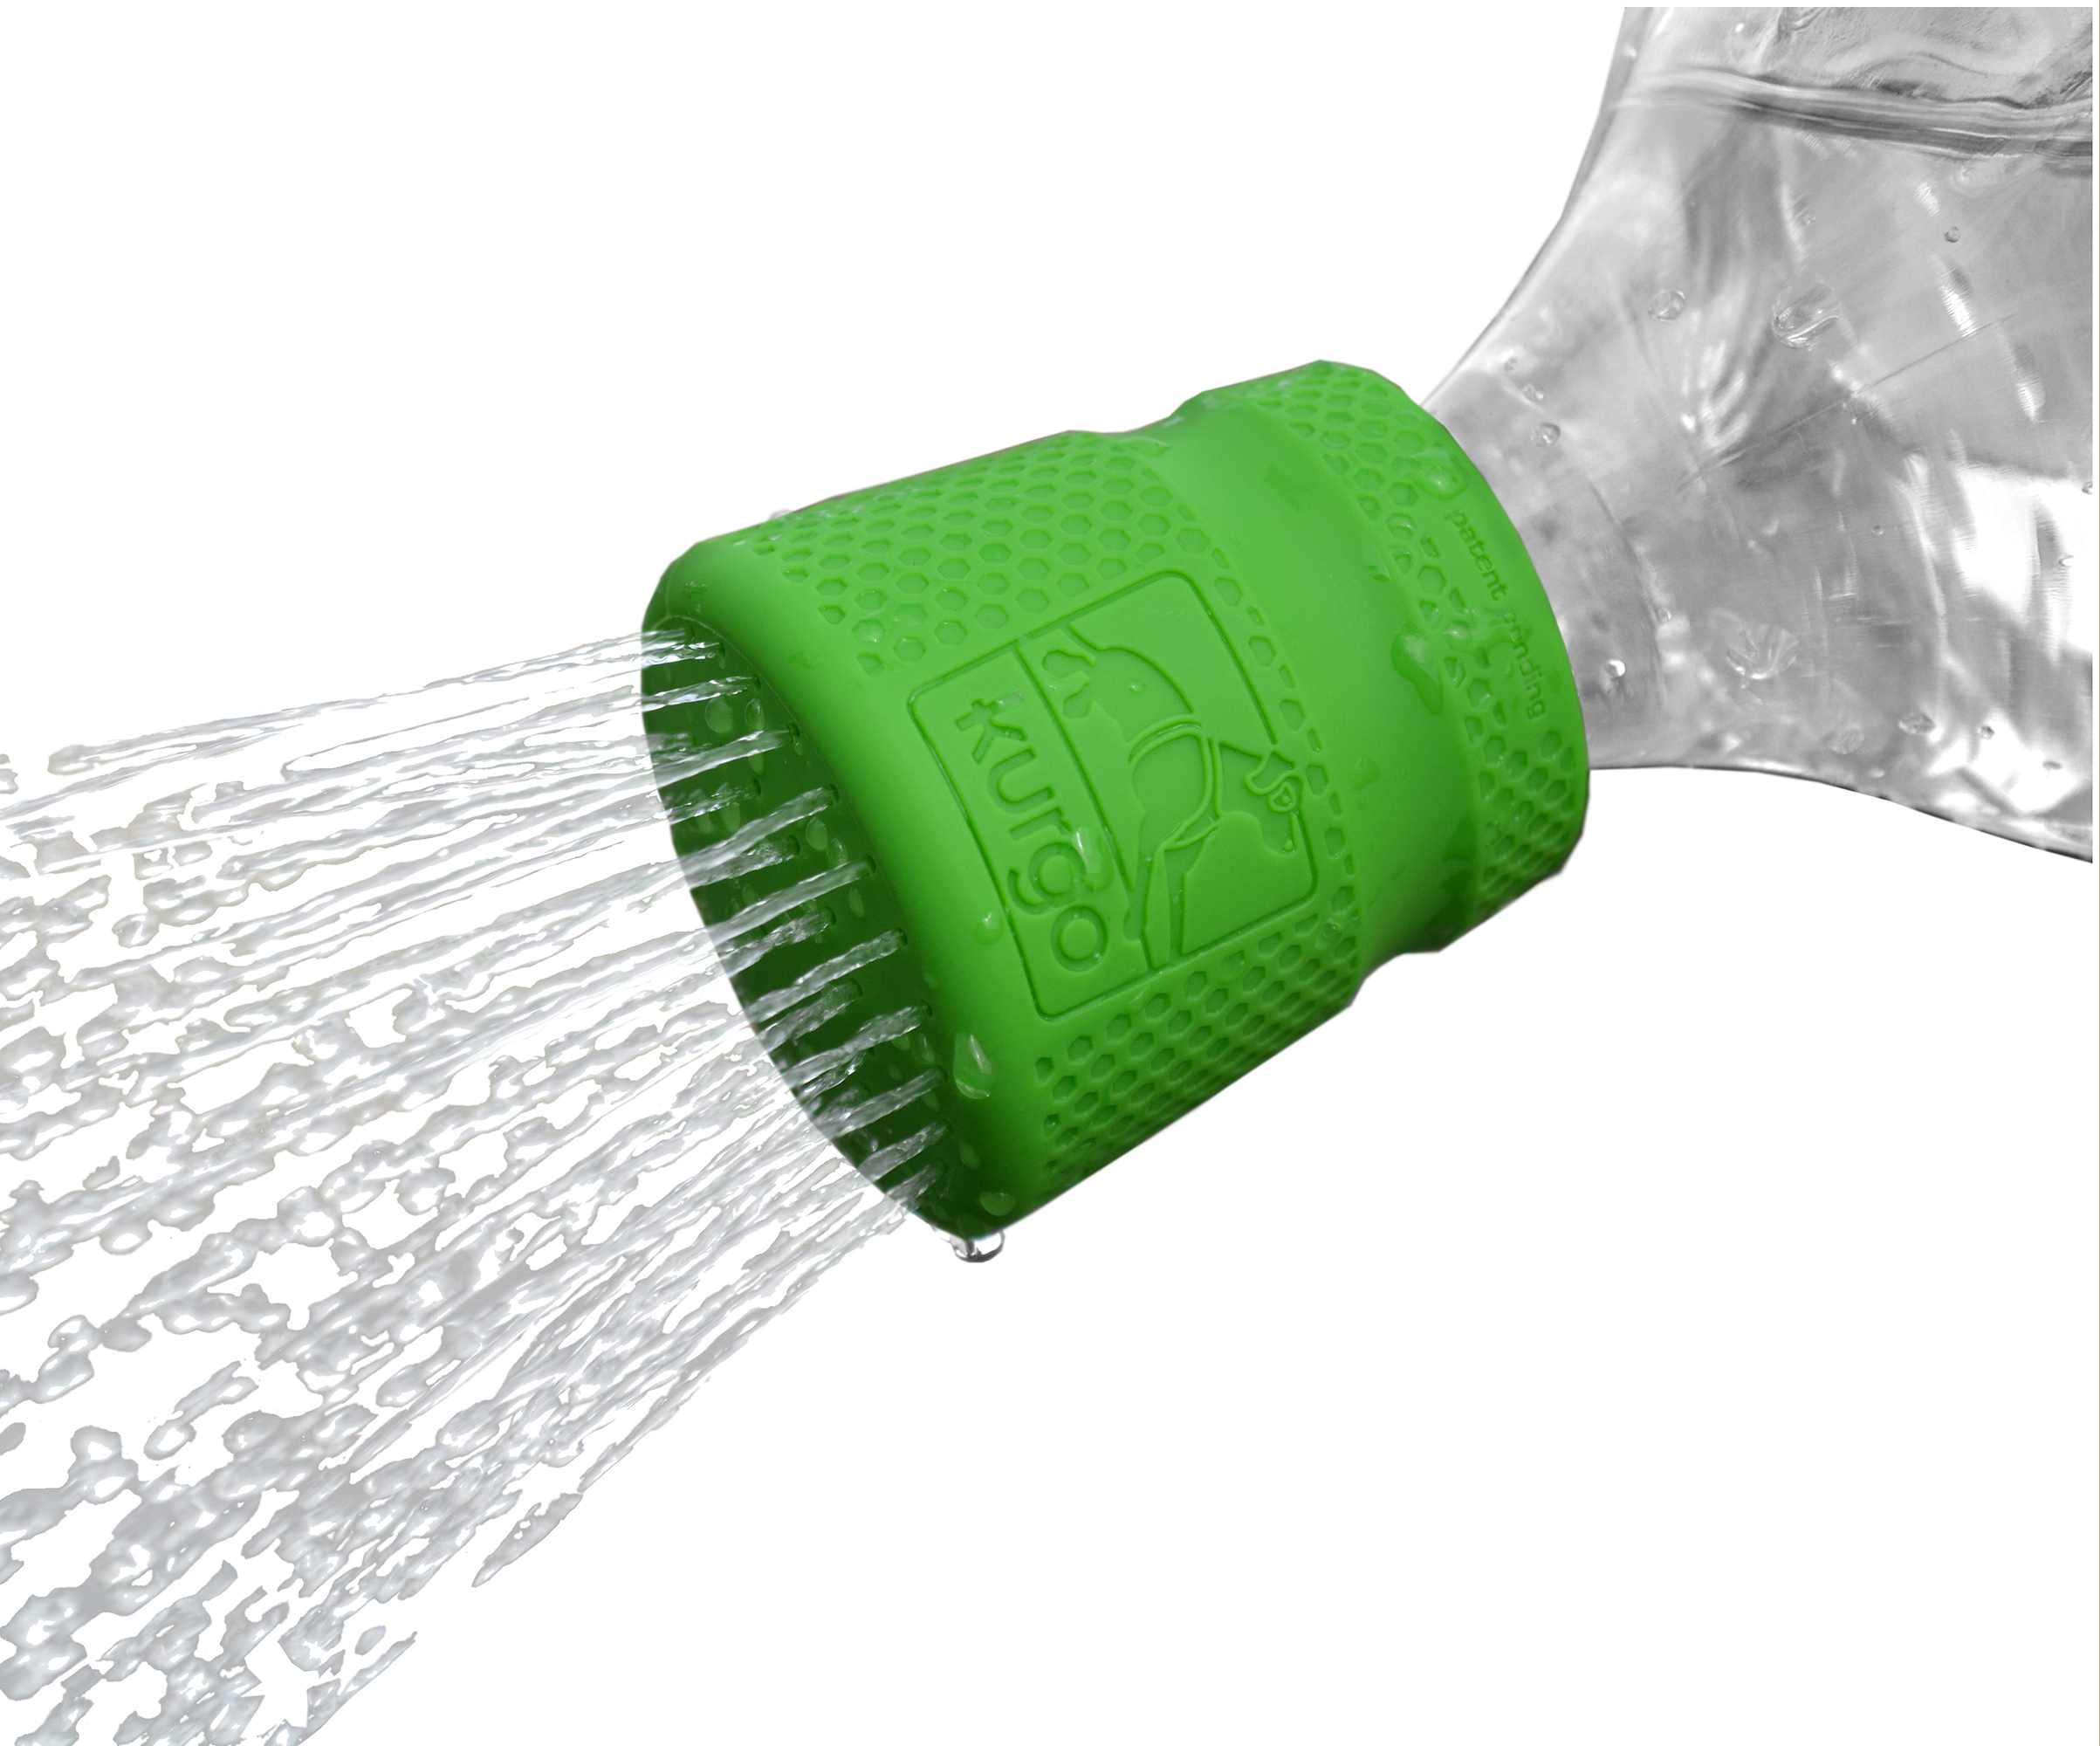 Portable Pet Shower - Kurgo - Fits any standard PET (polyethylene terephthalate) soda bottle between 16 ounces and 2 liters.